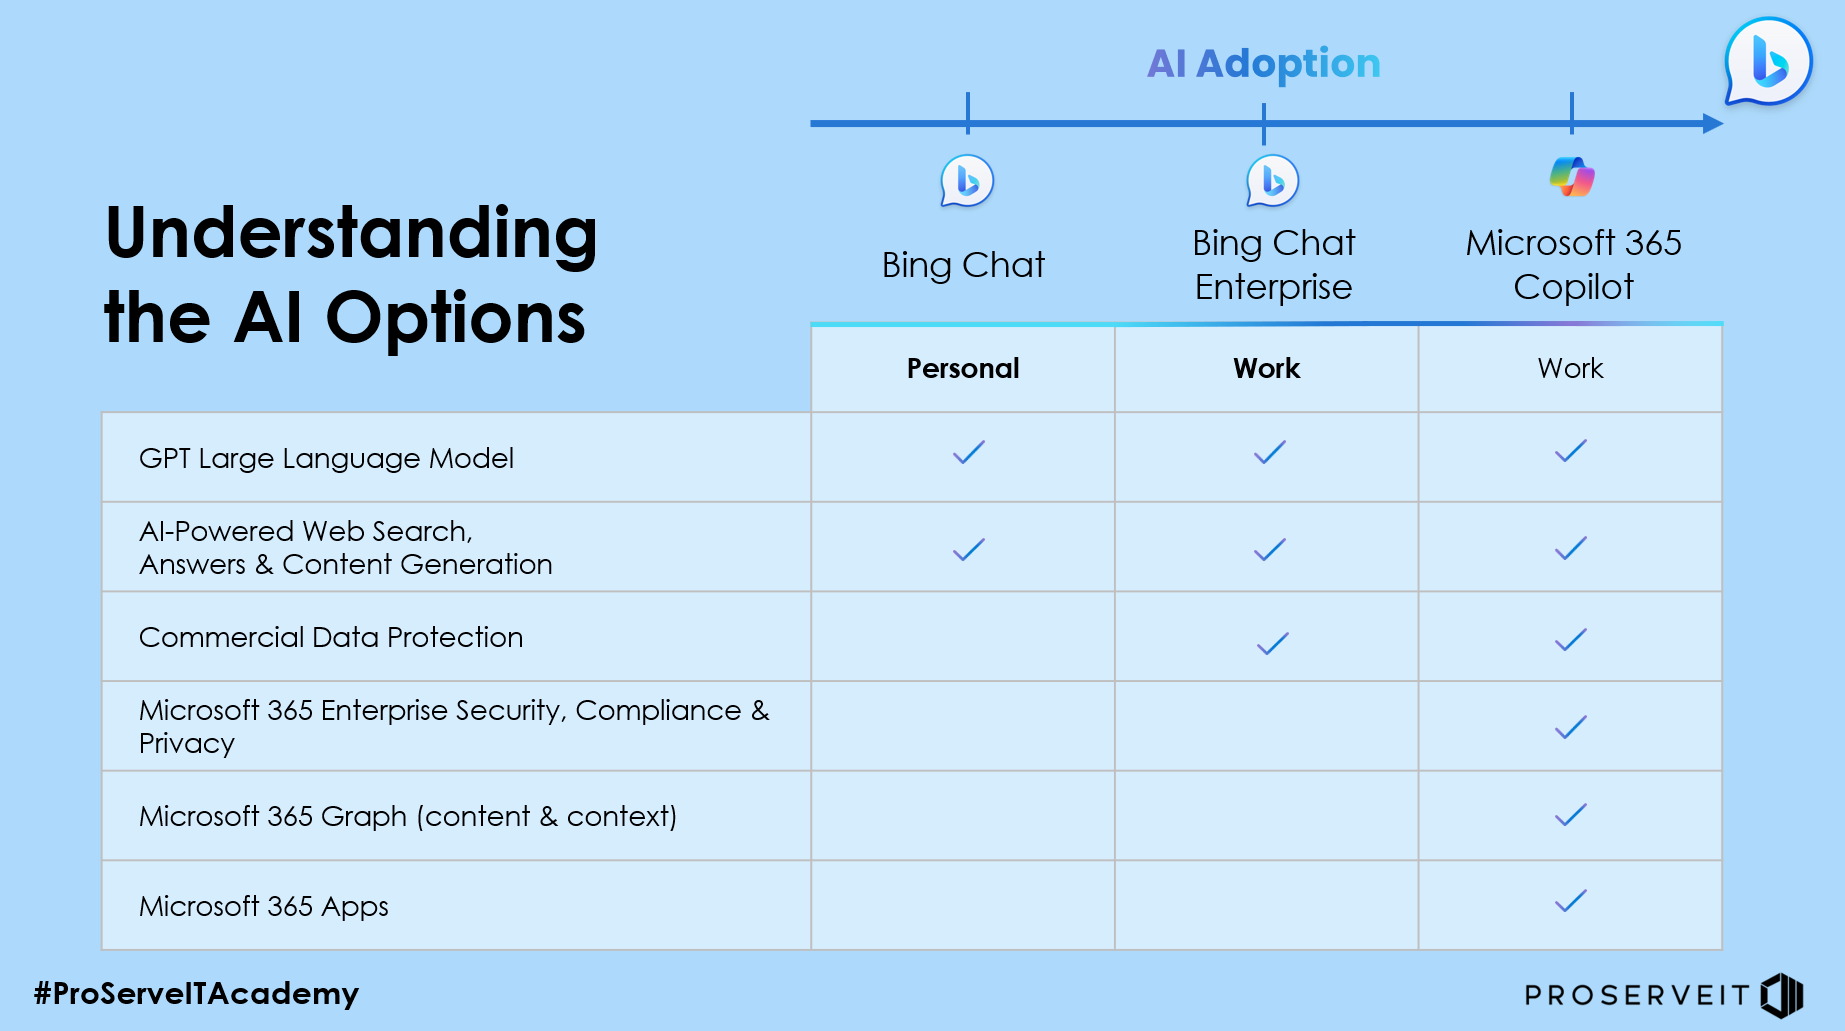 infographic - understanding the AI options: Bing chat, bing chat enterprise, microsoft 365 copilot 